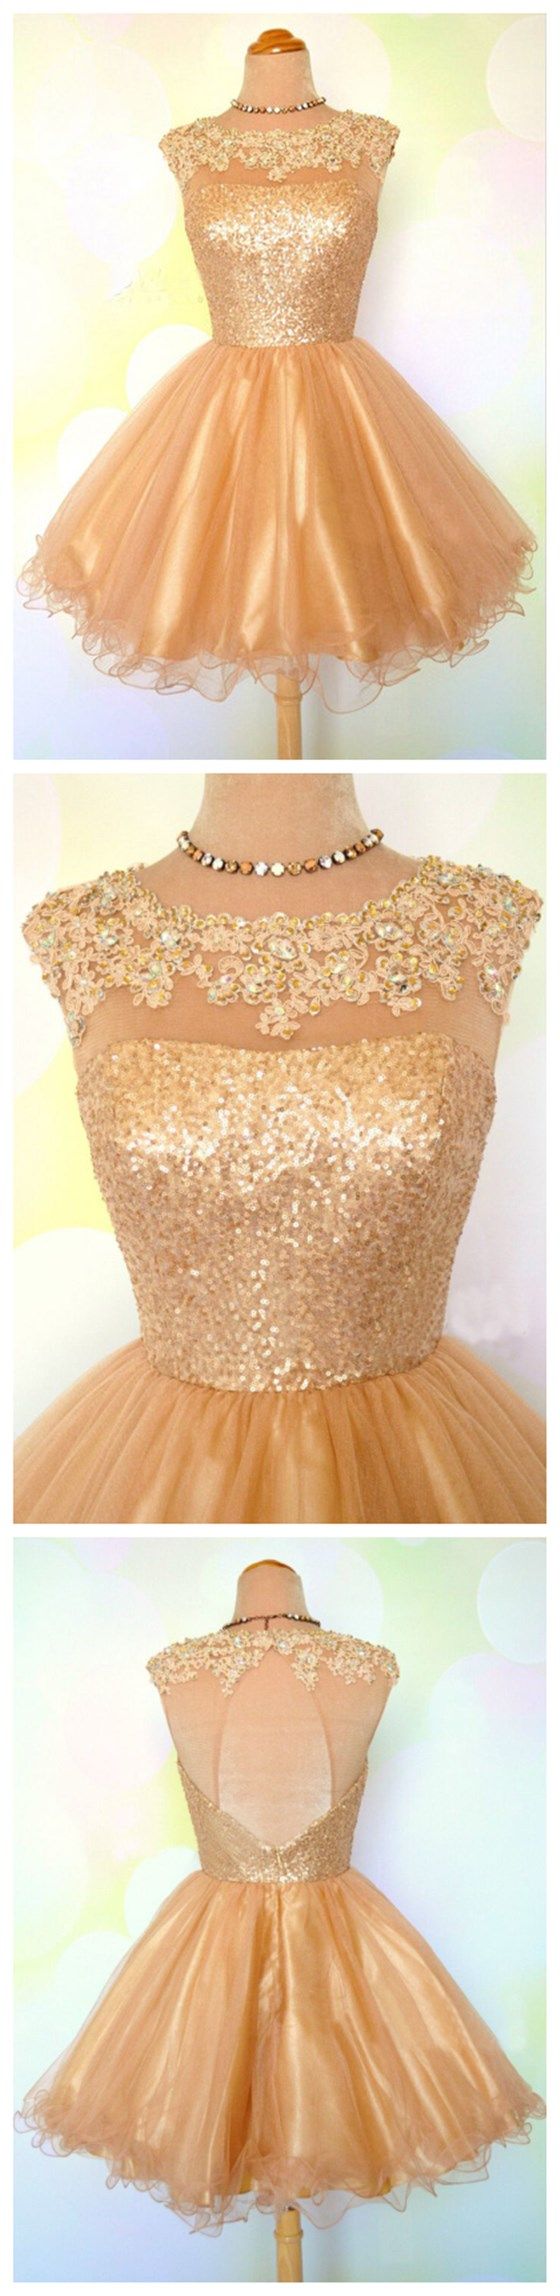 Homecoming Dress, Short Homecoming Dress, Gold Homecoming Dress, Short Prom Dress, Party Prom Dress,